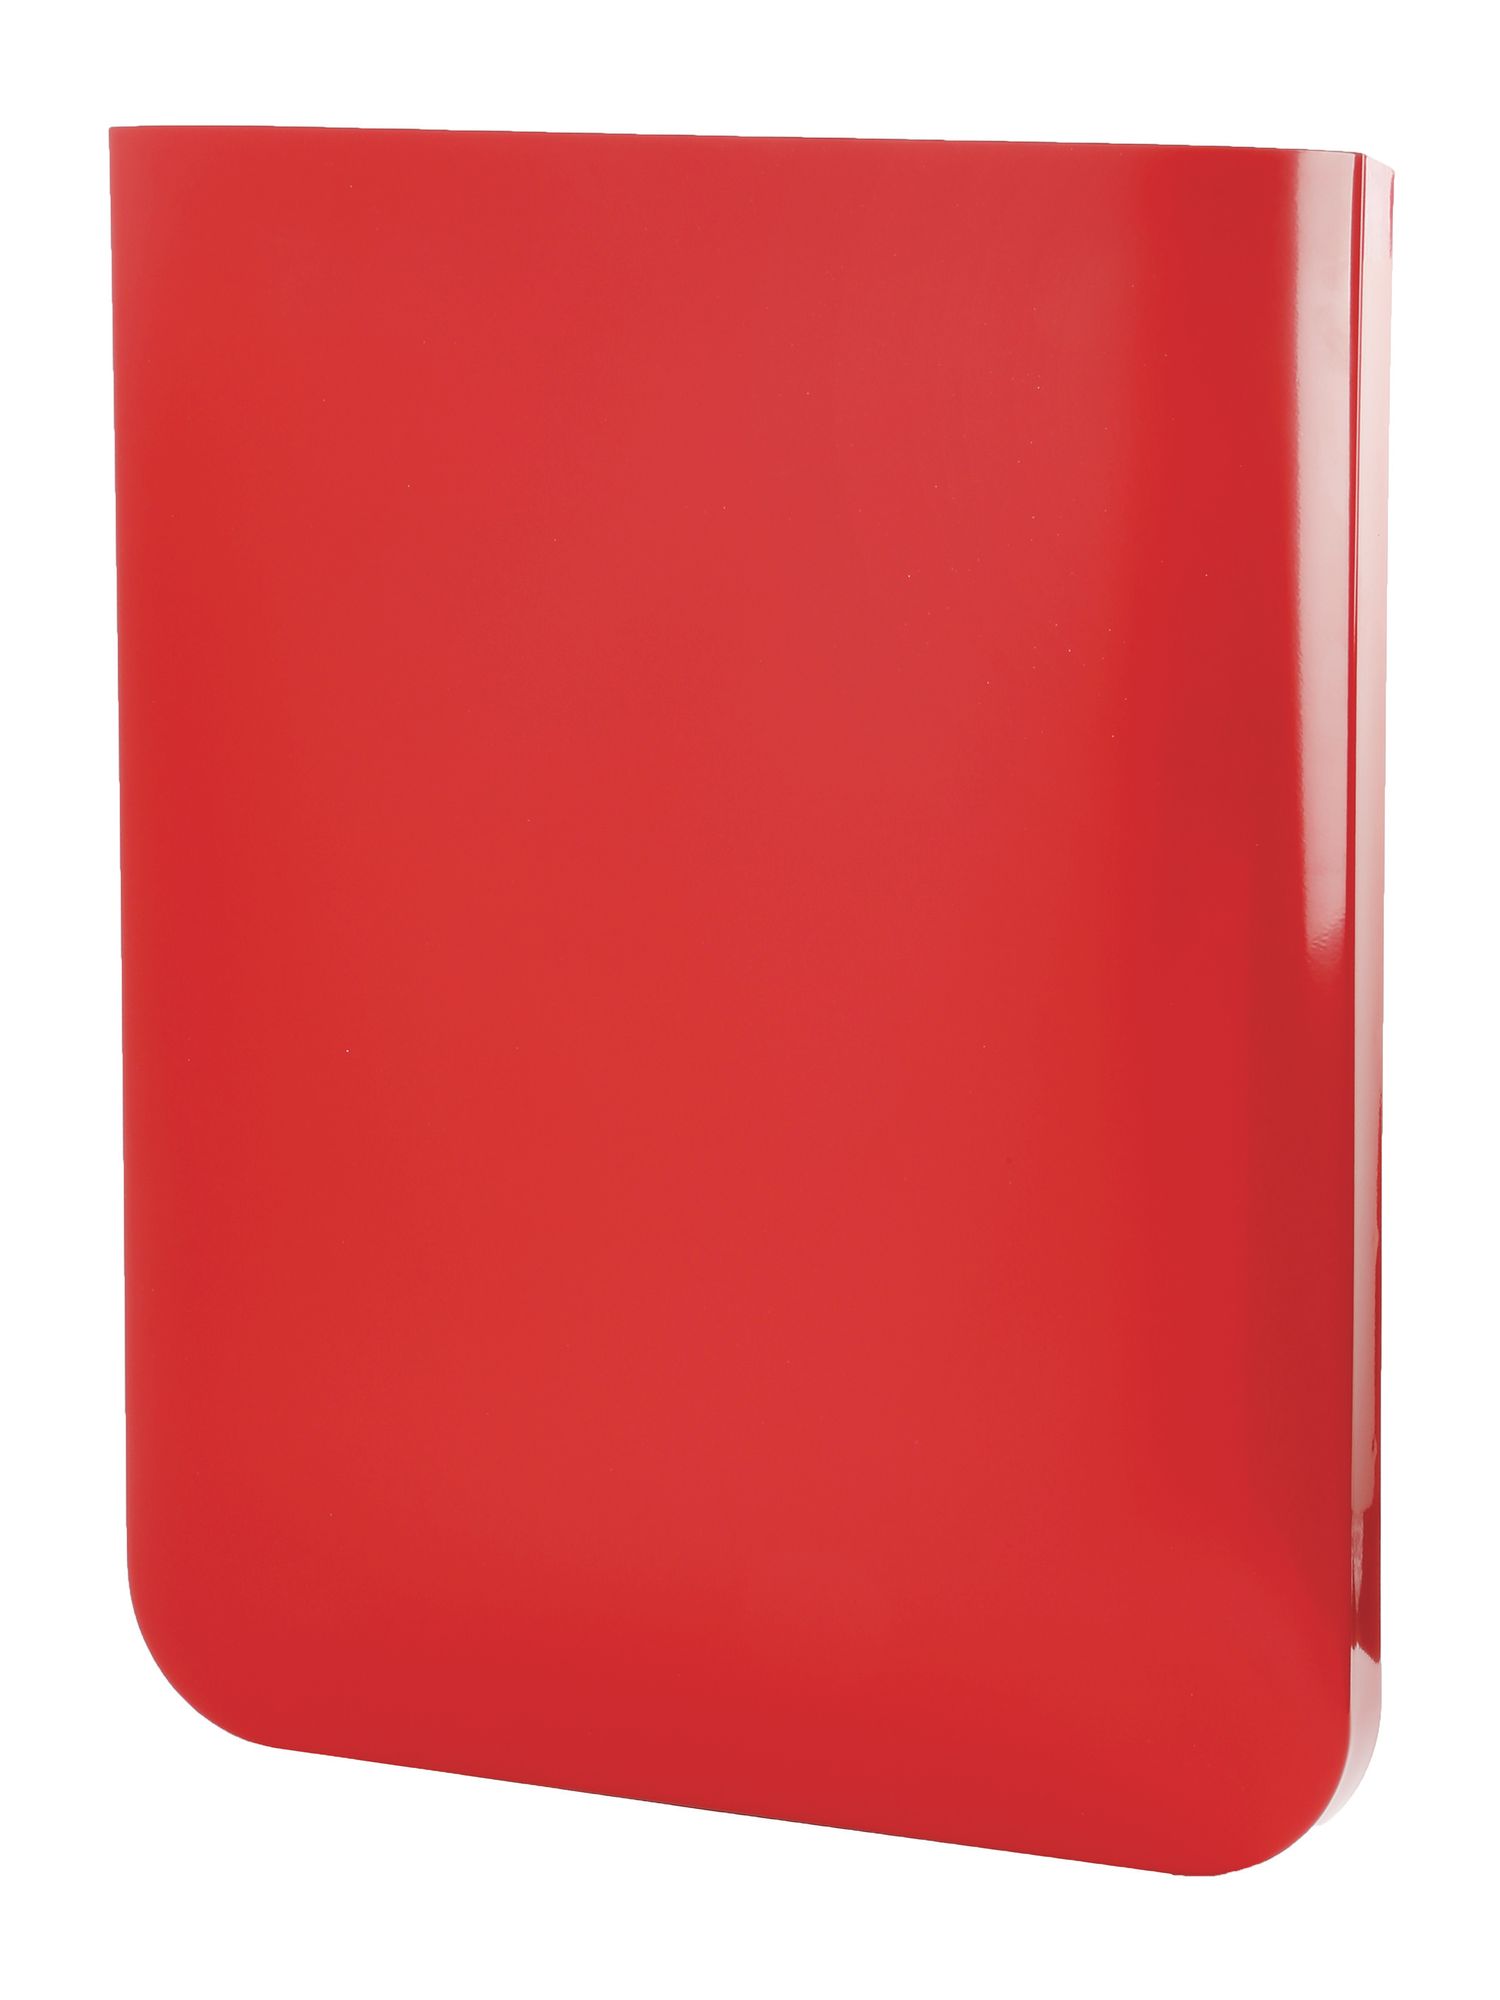 Dekorblech Überdachte Gefrierschrank komplett Tür rot glänzend (BD-00773644)